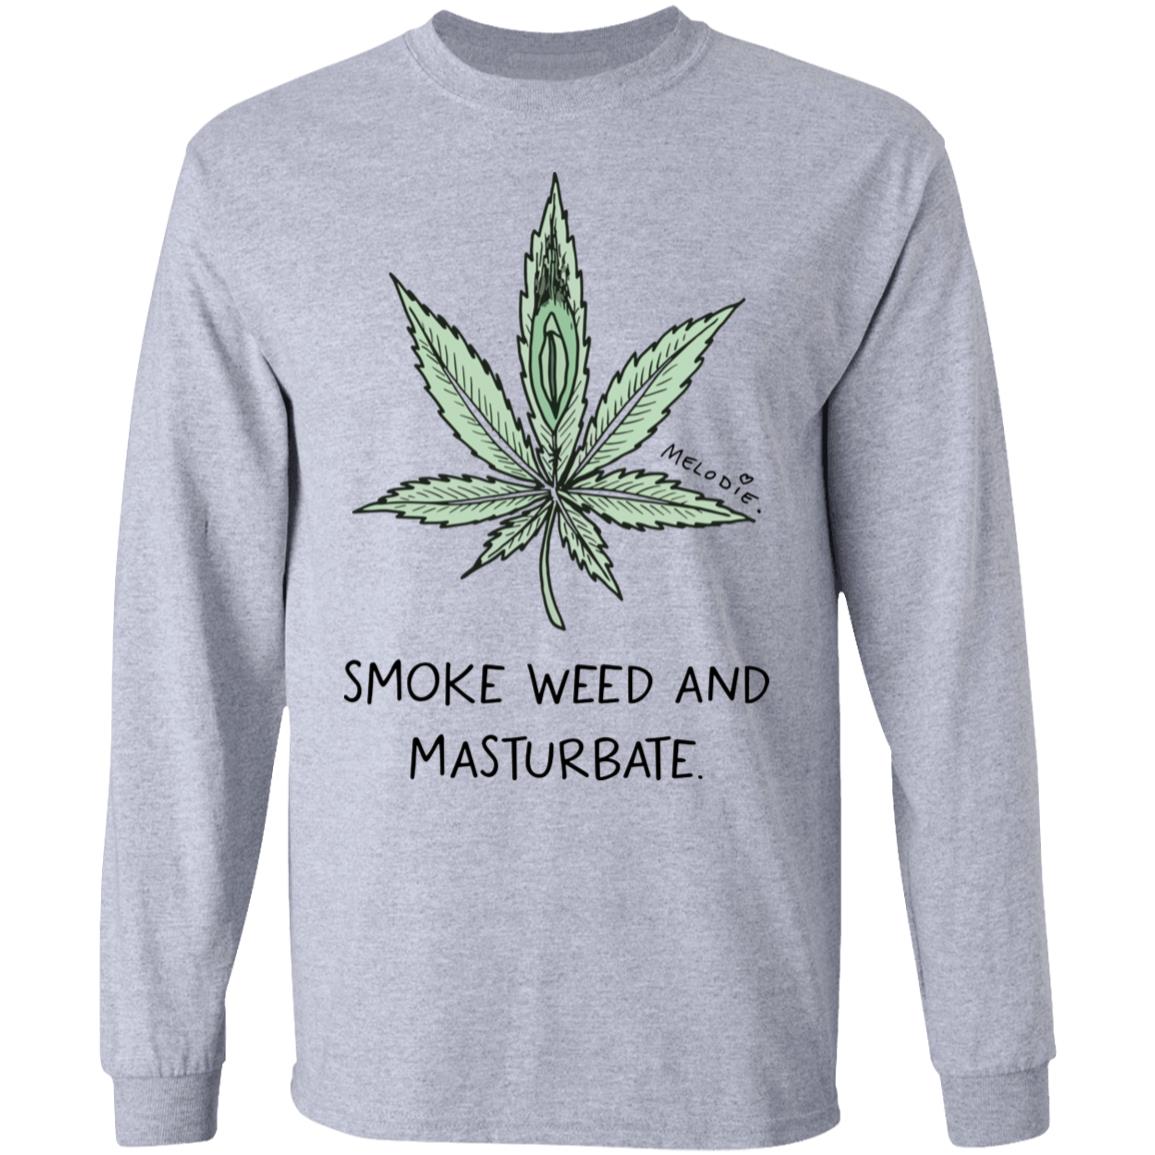 Melodie smoke weed and masturbate shirt - Lelemoon